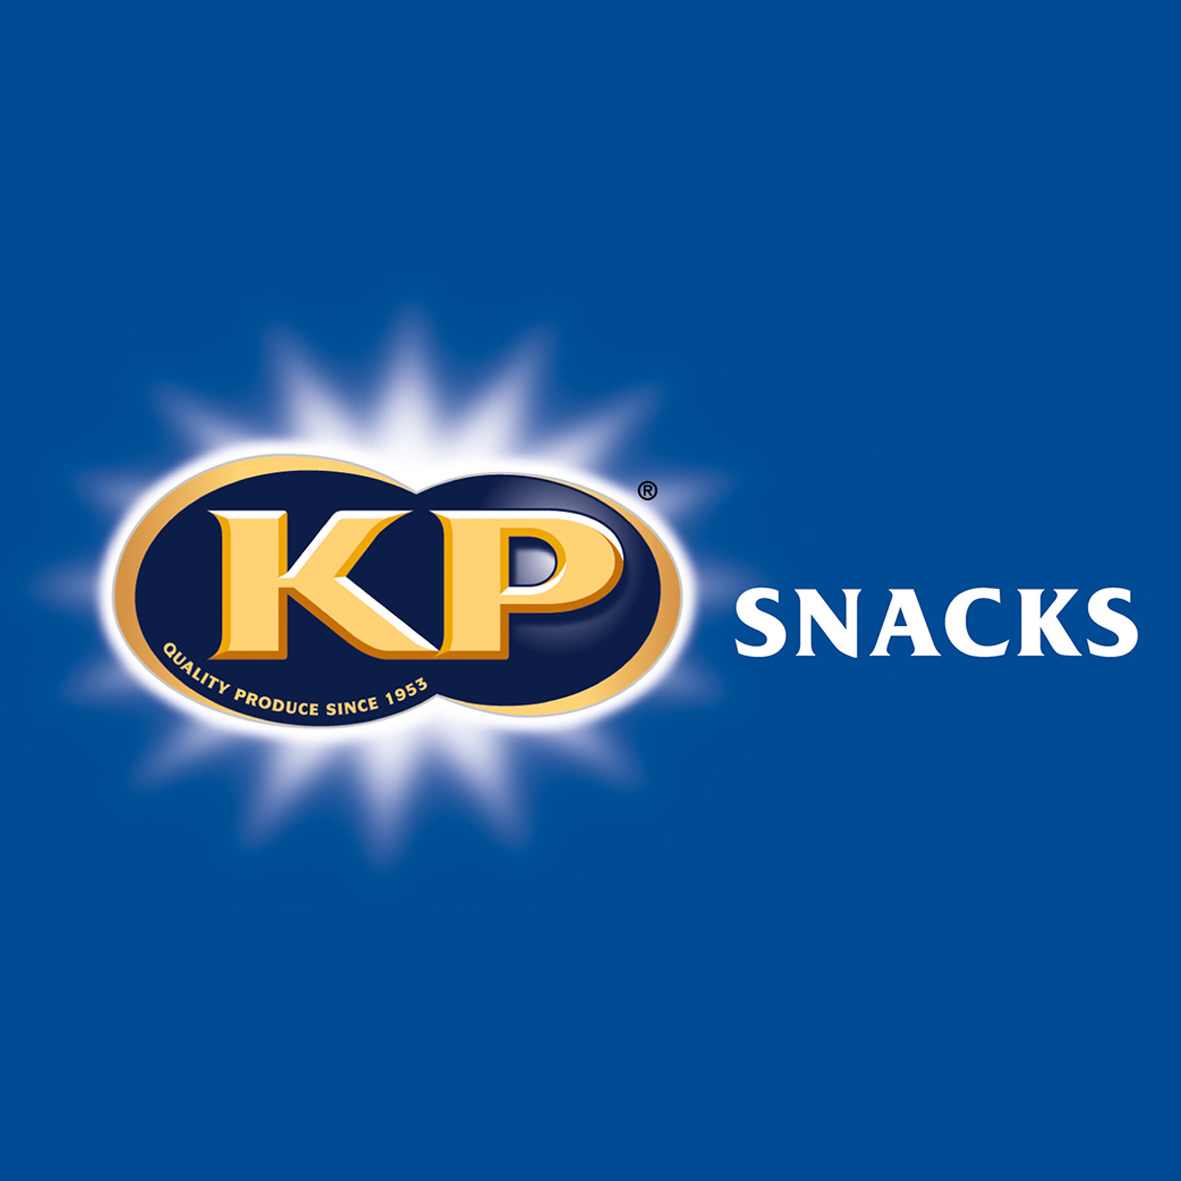 KP-Snacks-LOGO-blue.jpg